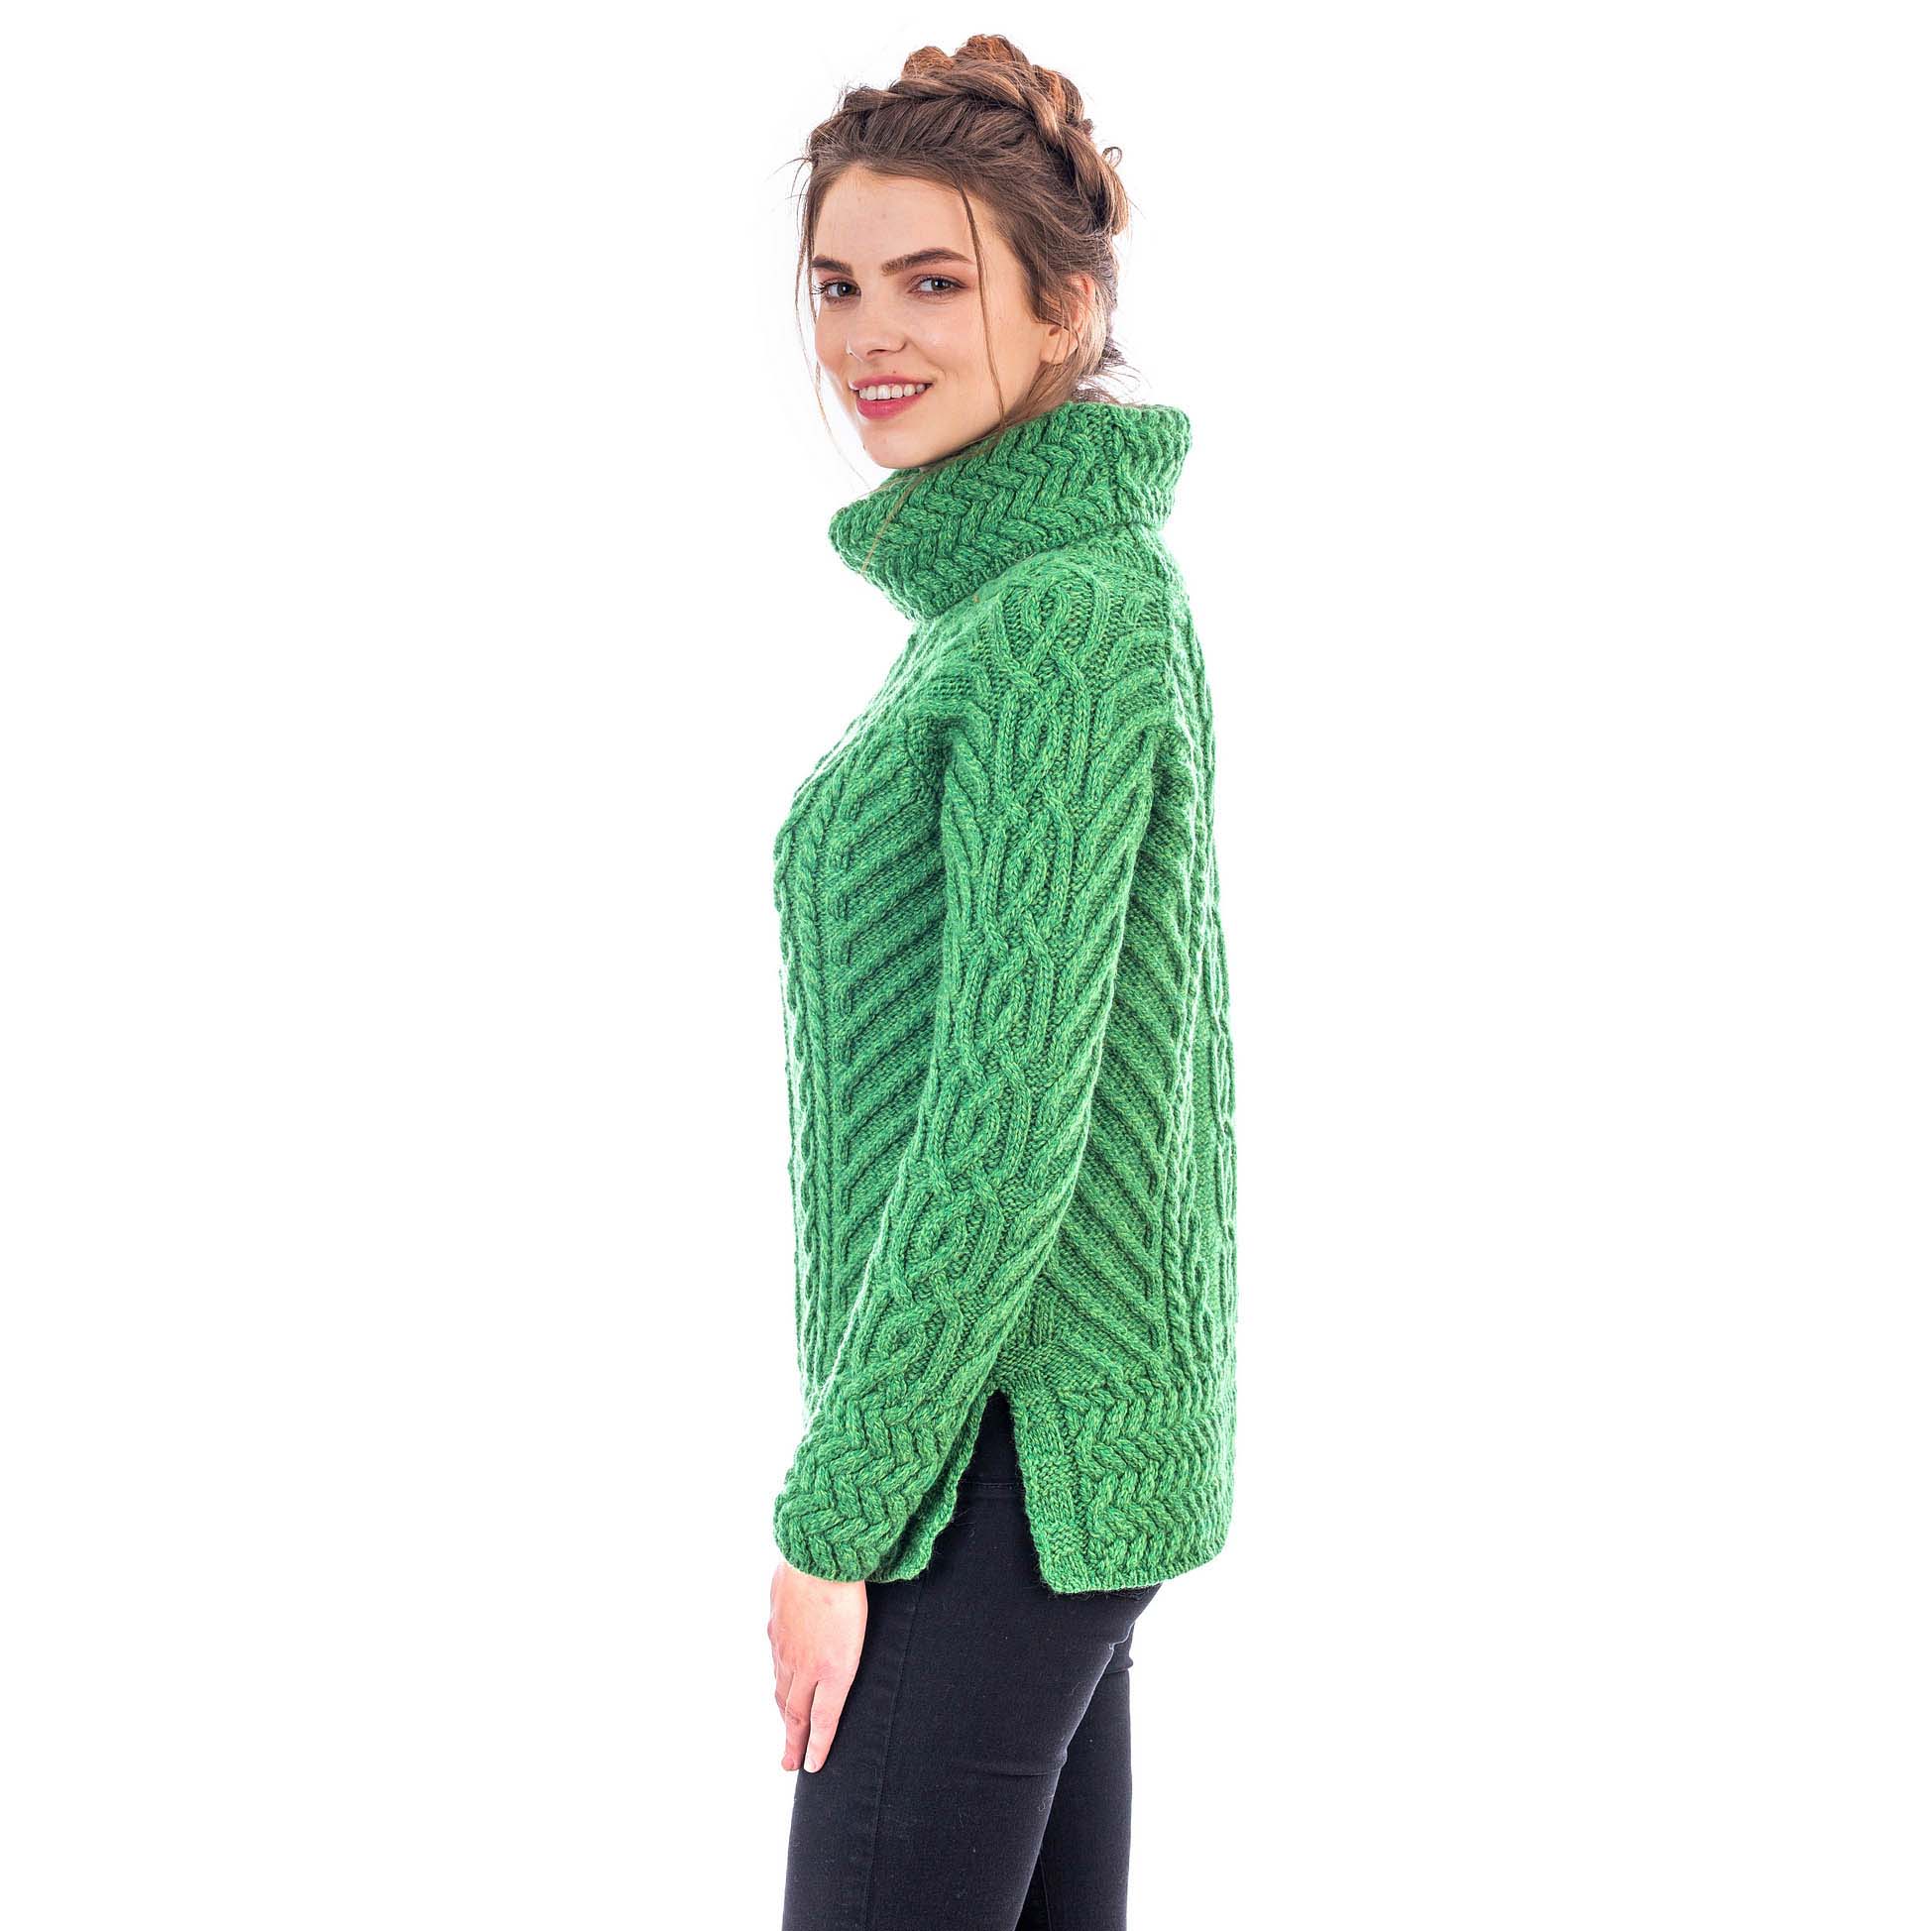 Product image for Irish Sweater | Merino Wool Aran Knit Cowl Neck Ladies Sweater